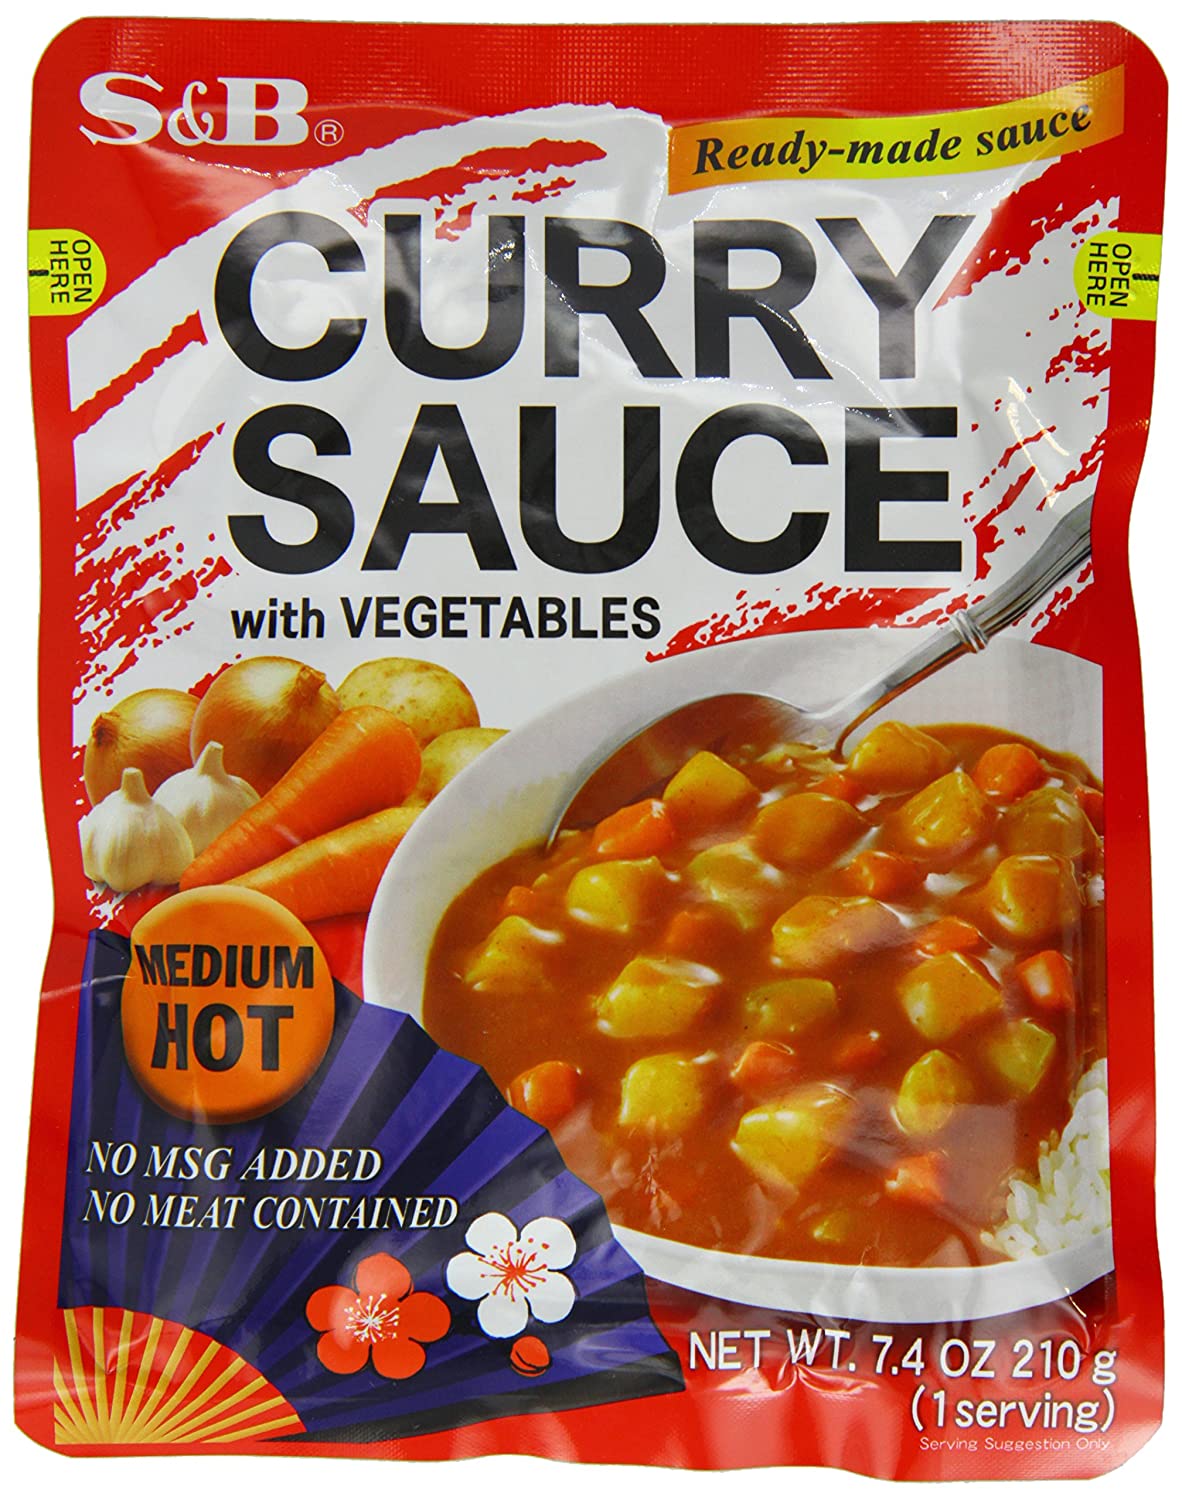 S&B Curry sauce medium hot